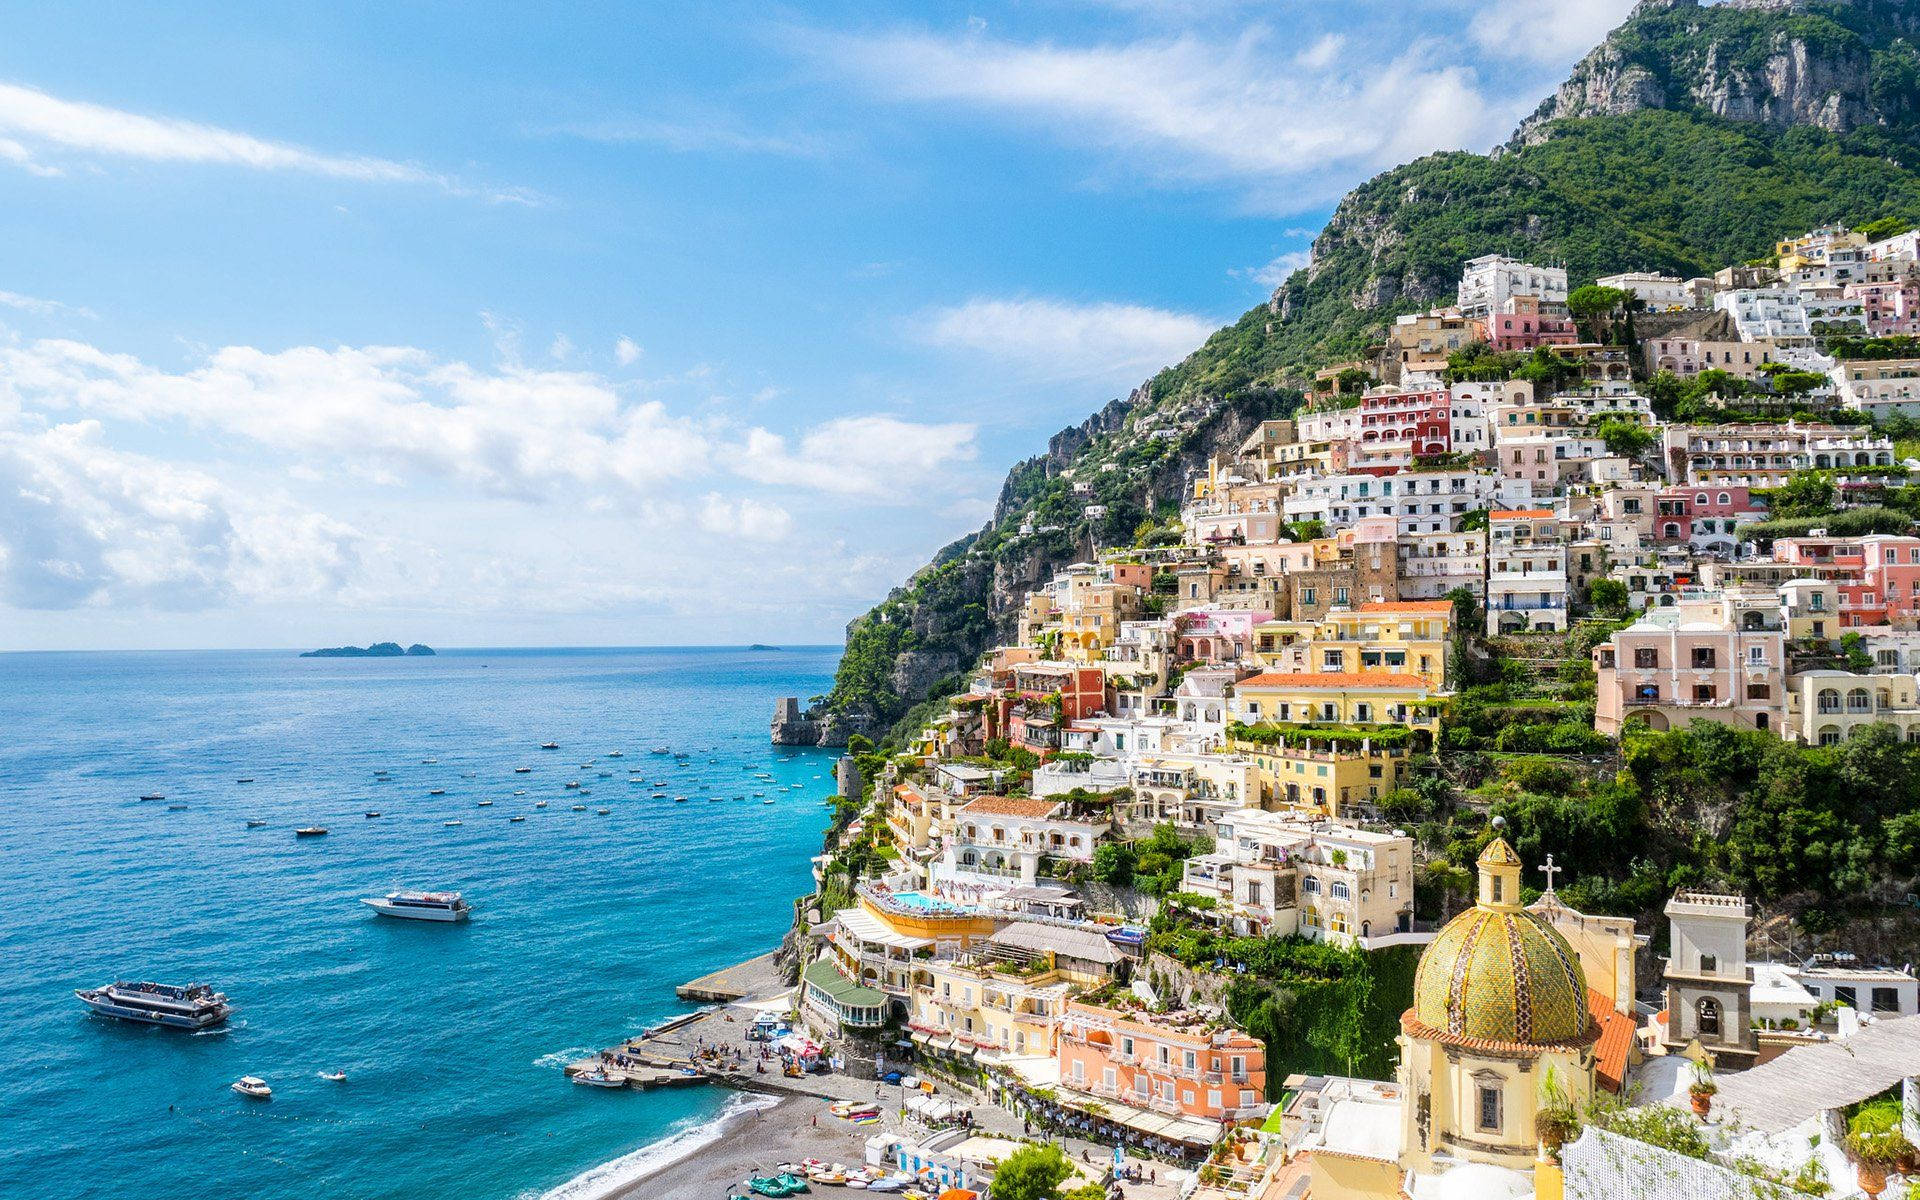 Capri Italy Houses On Steep Cliff